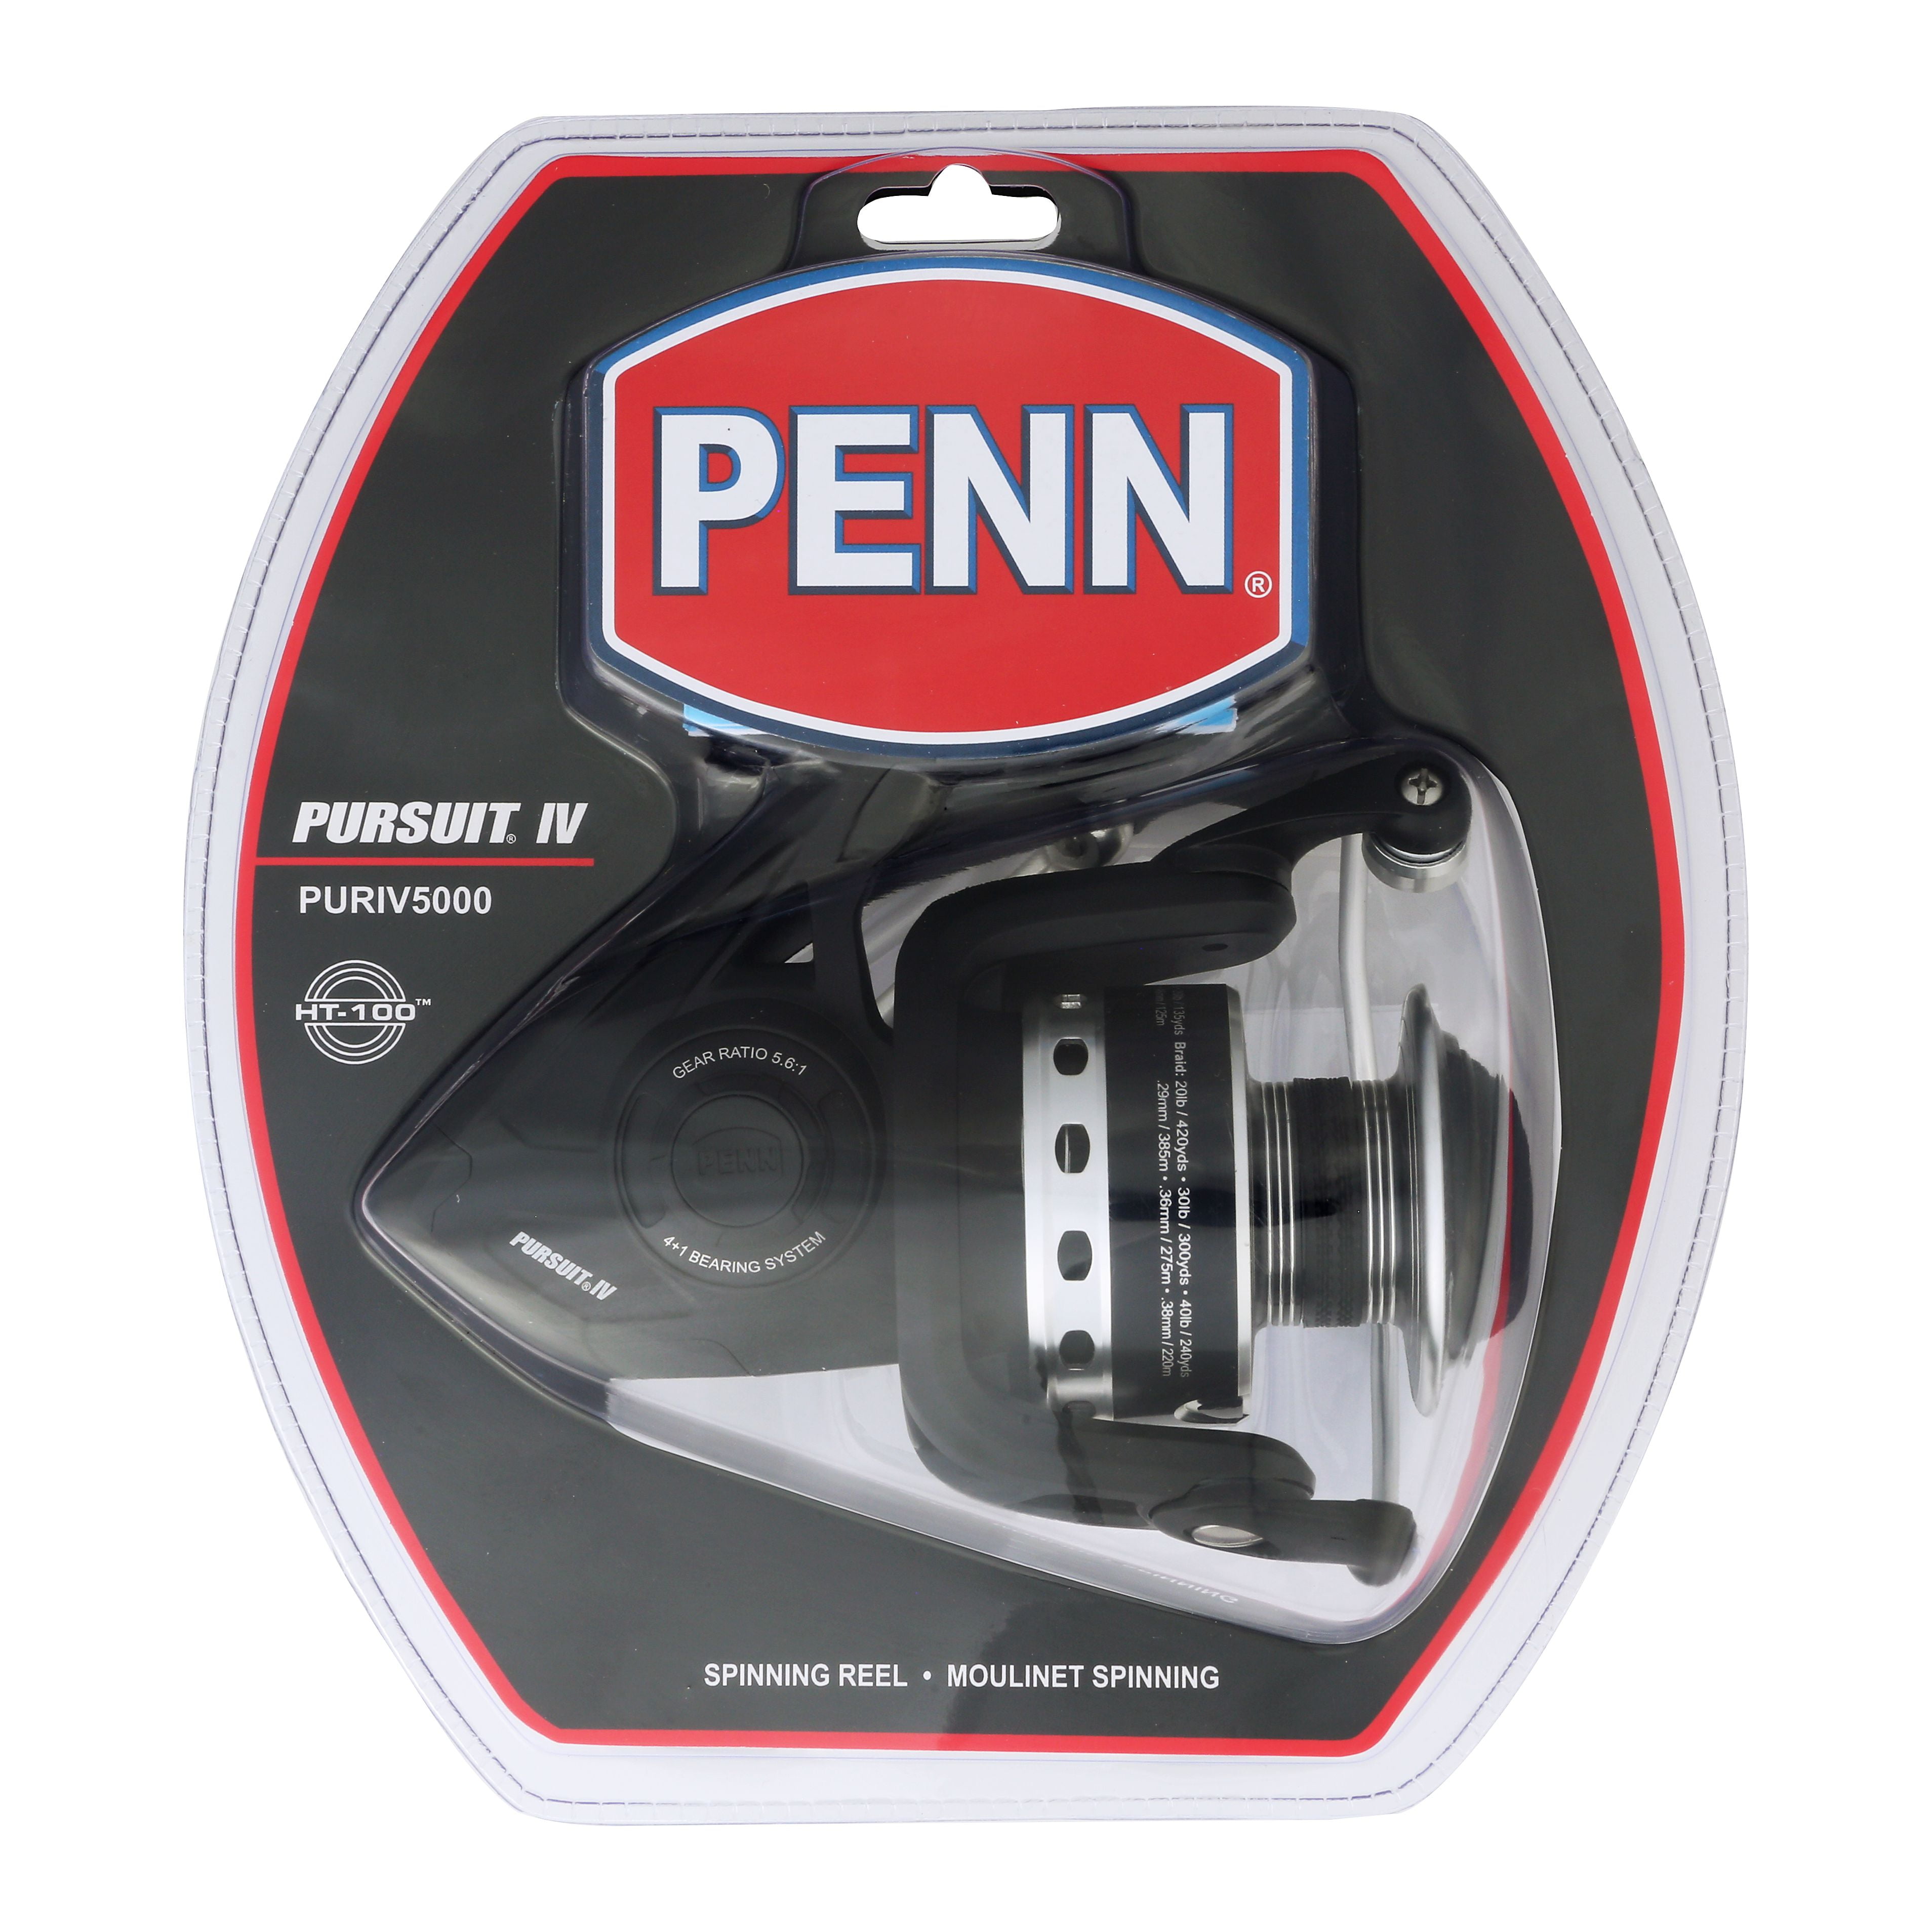 Penn PURIV8000C Pursuit IV Spinning Reel, HT-100 Drag, 5 Sealed Bearings